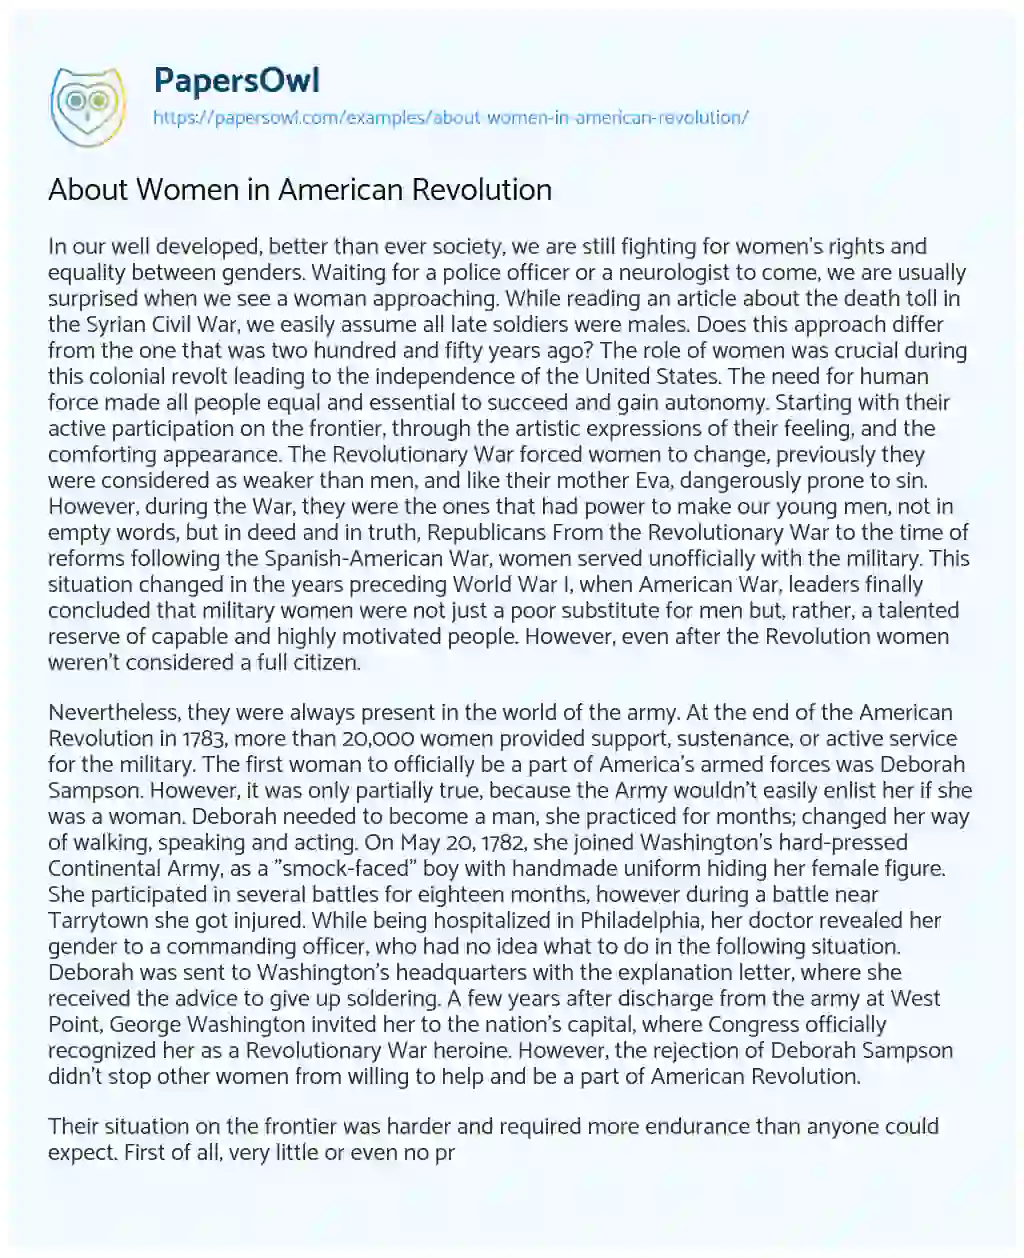 About Women in American Revolution essay